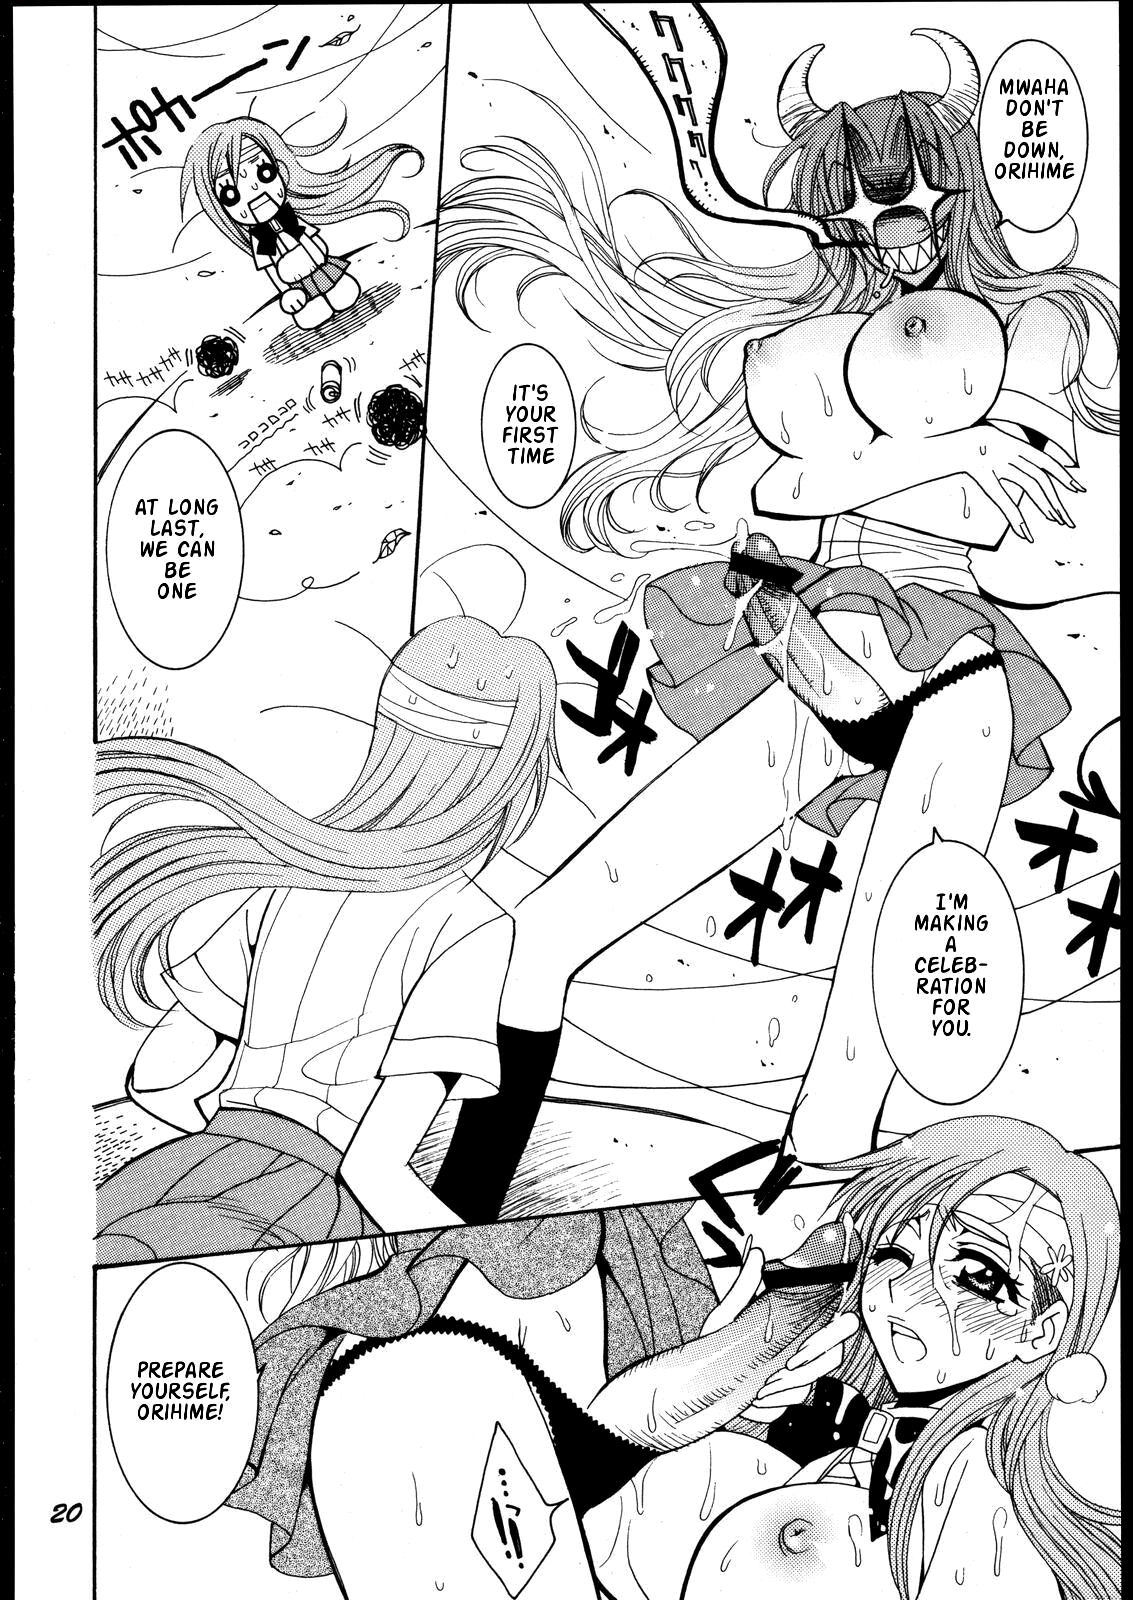 Love Potion #9 bleach 18 hentai manga